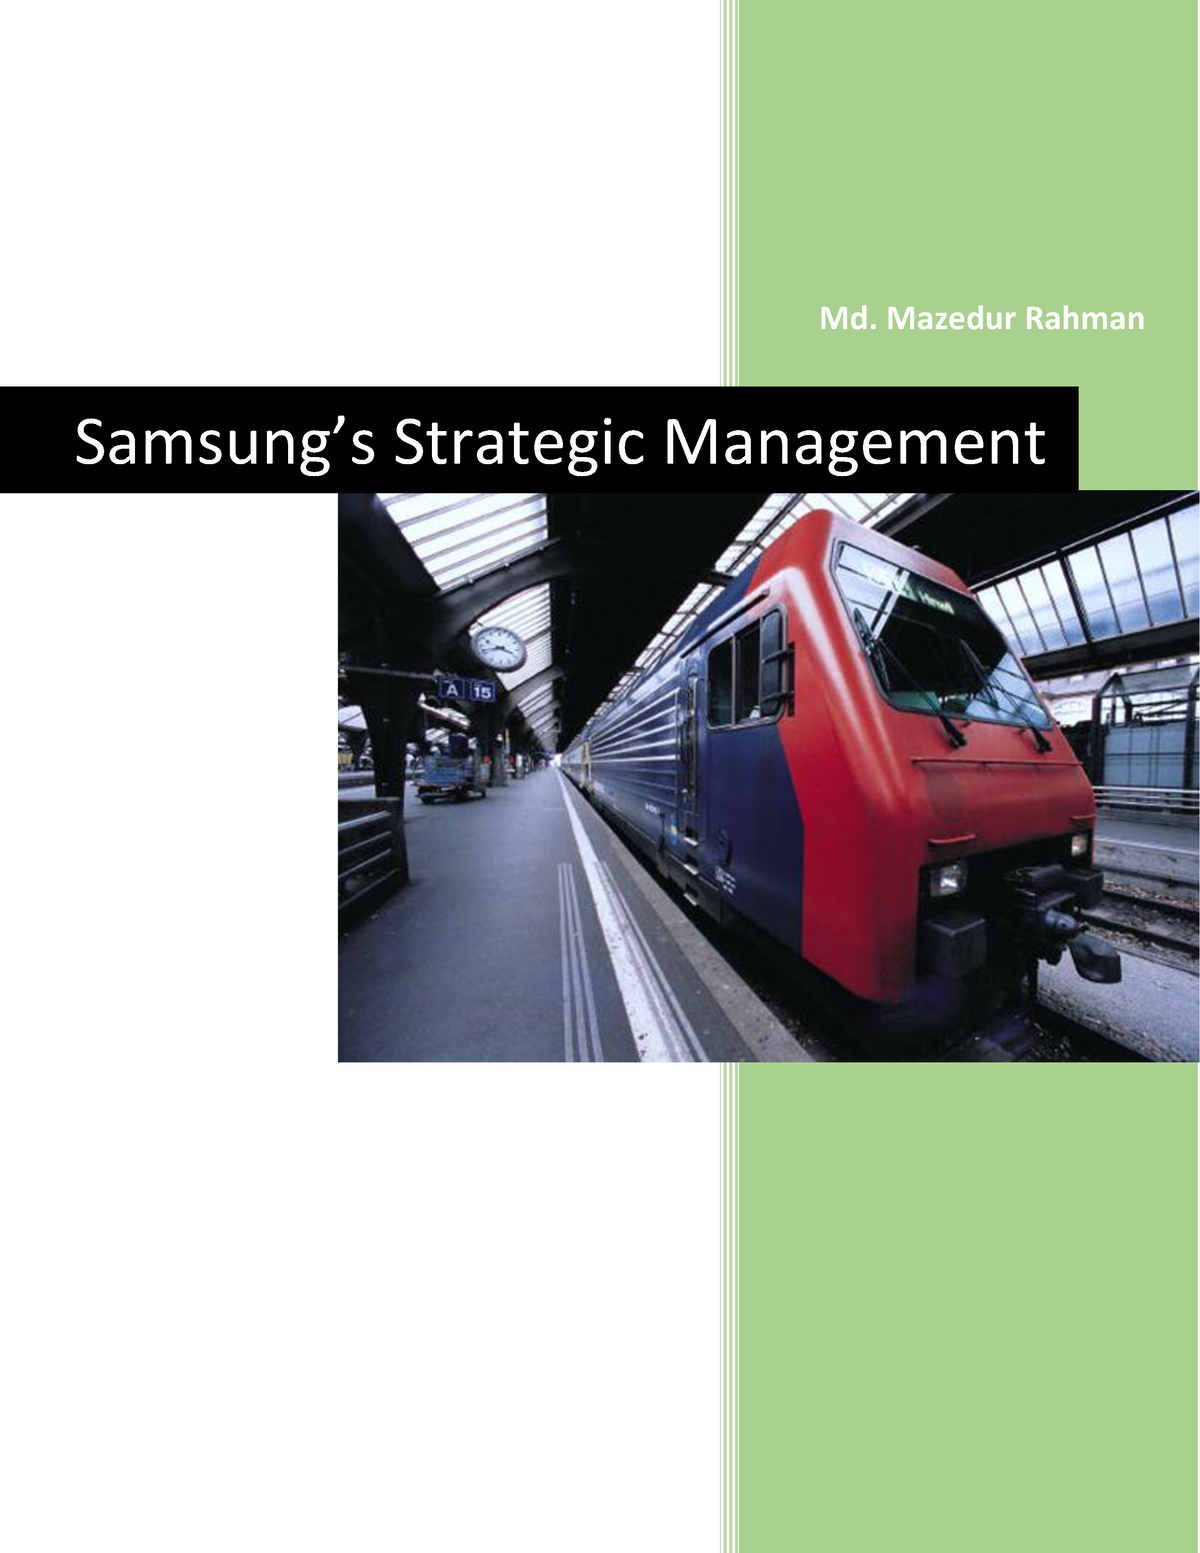 samsung strategic management case study